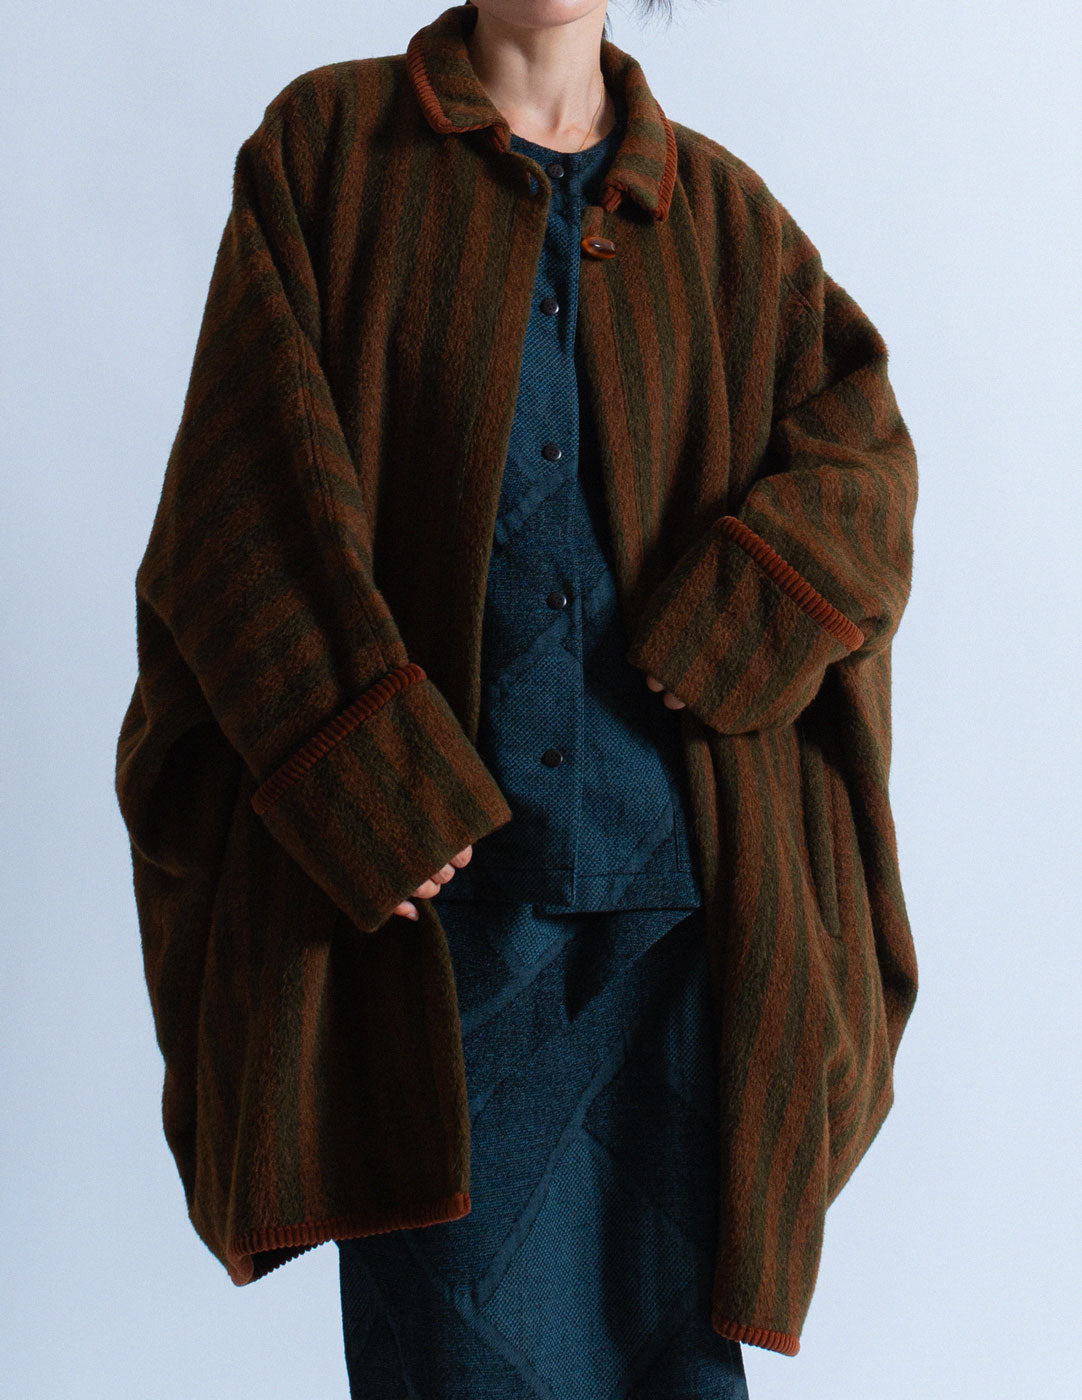 Gianni Versace vintage Maillard cape wool coat open detail